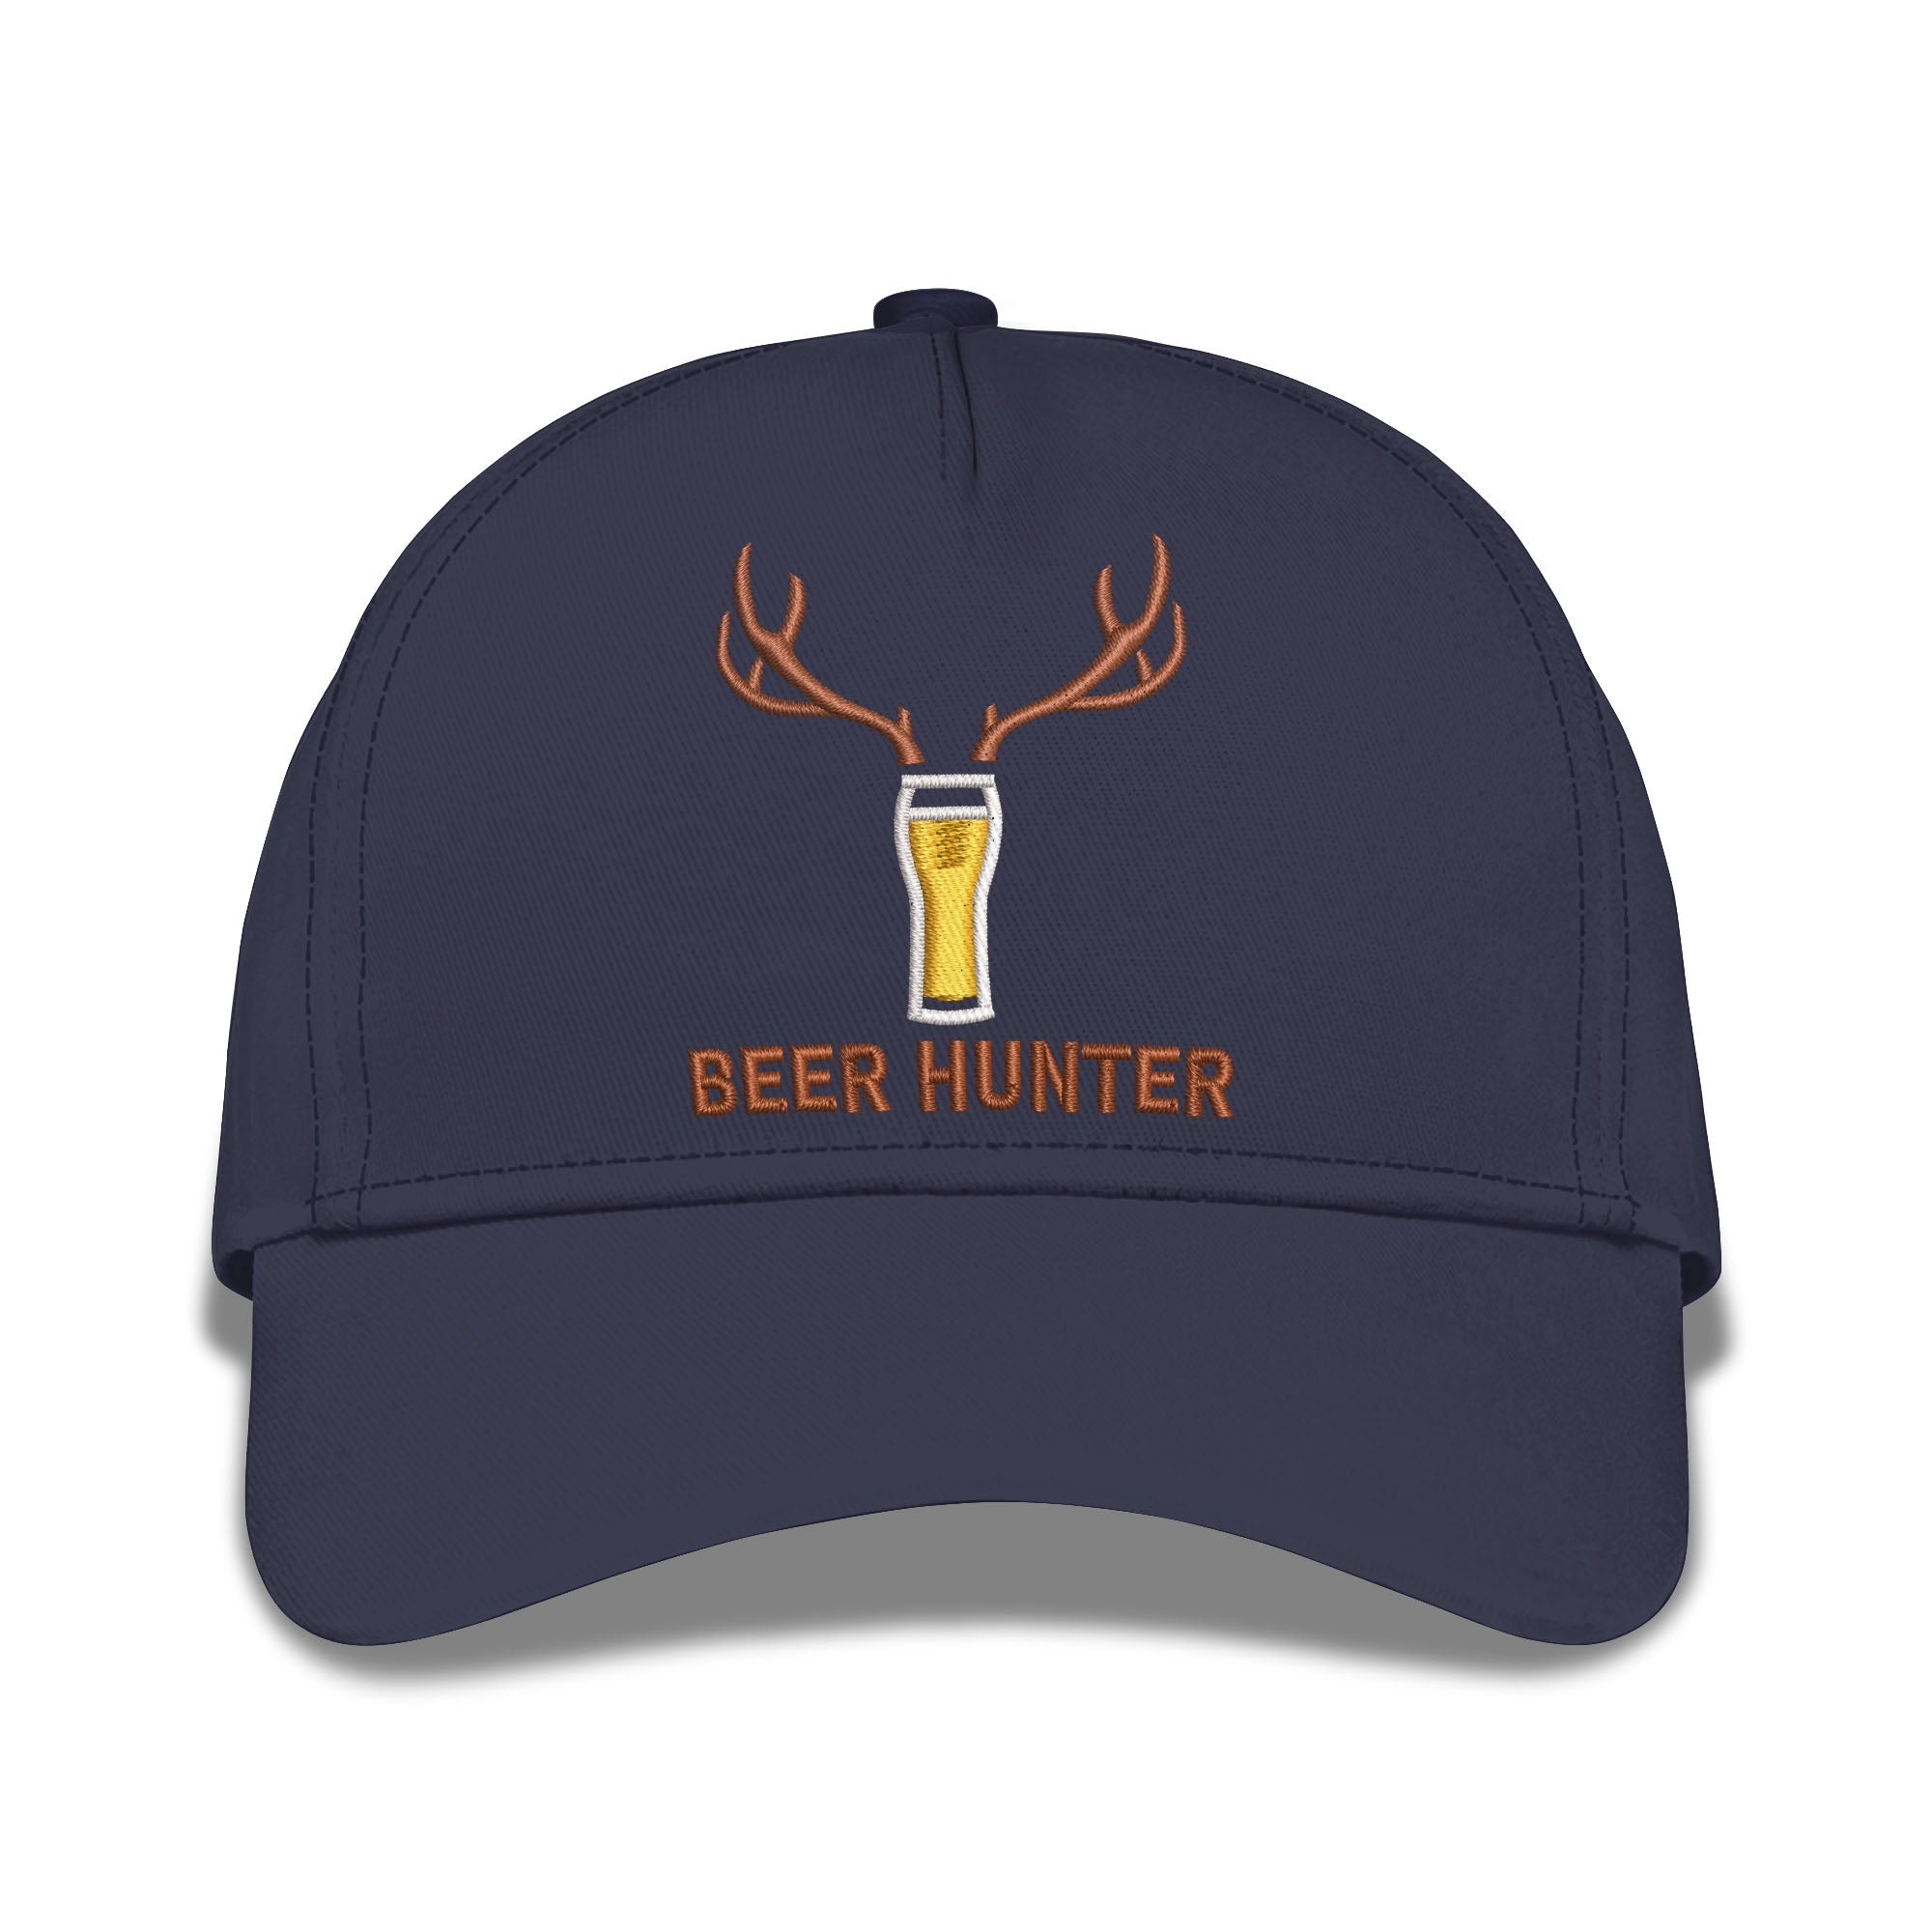 Beer Hunter Embroidered Baseball Caps, Deer Hunting Ballcap